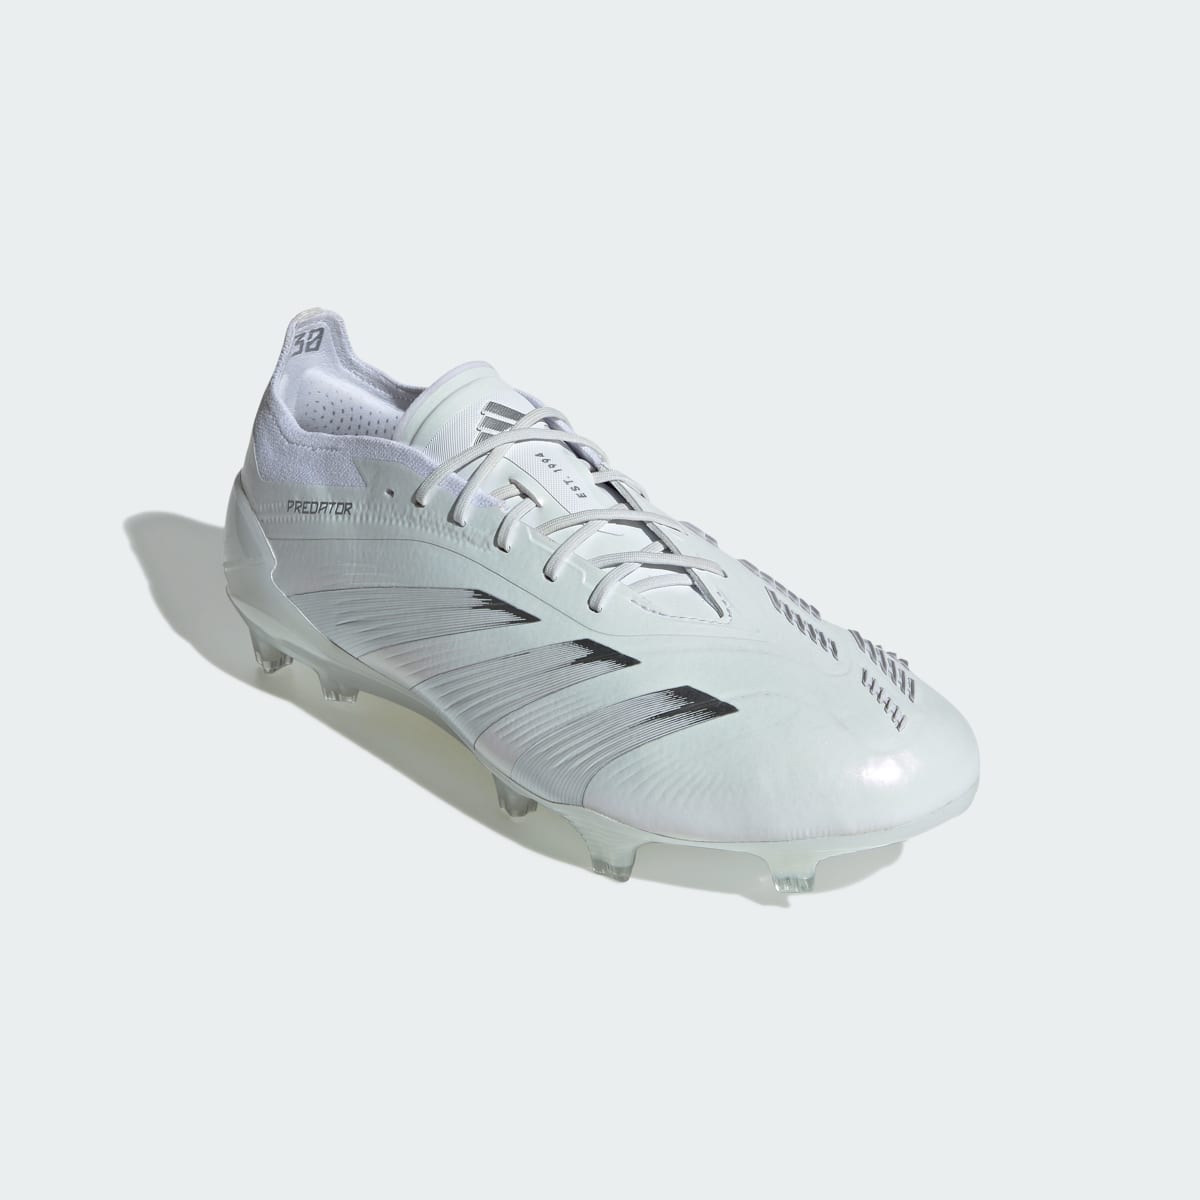 Adidas Predator Elite Firm Ground Football Boots. 6